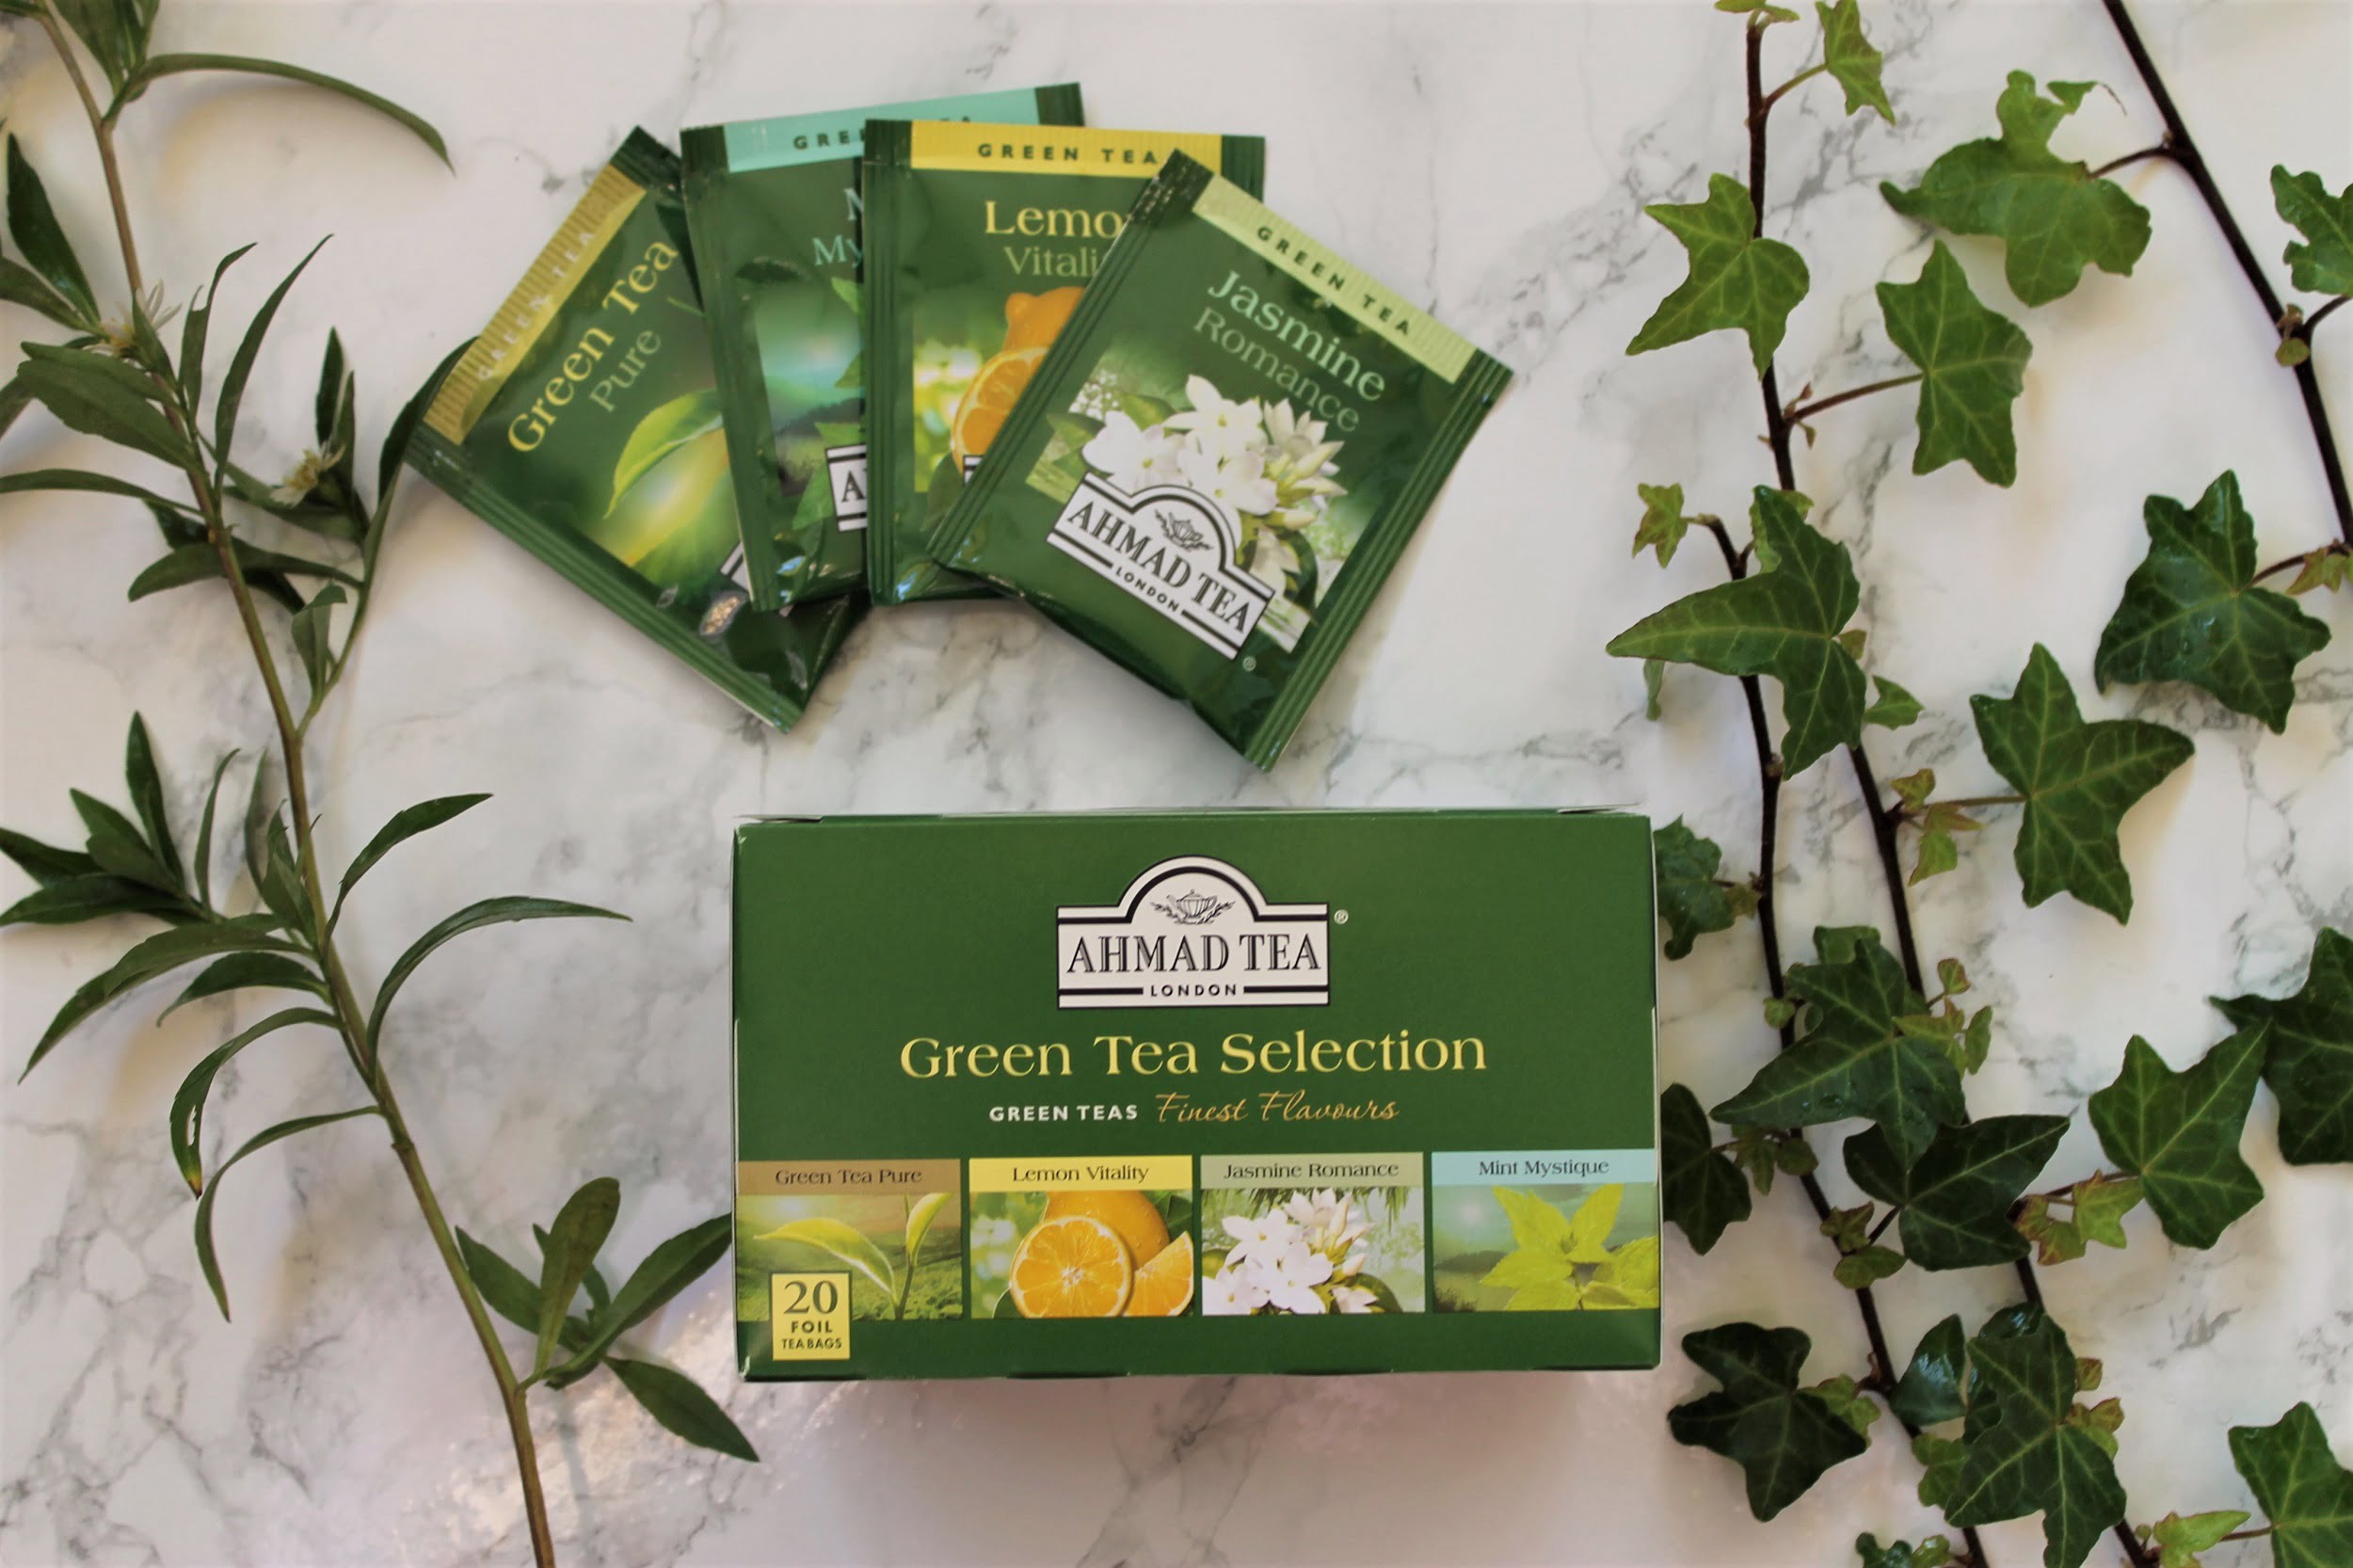 Ahmad Green Tea Selection Box Review